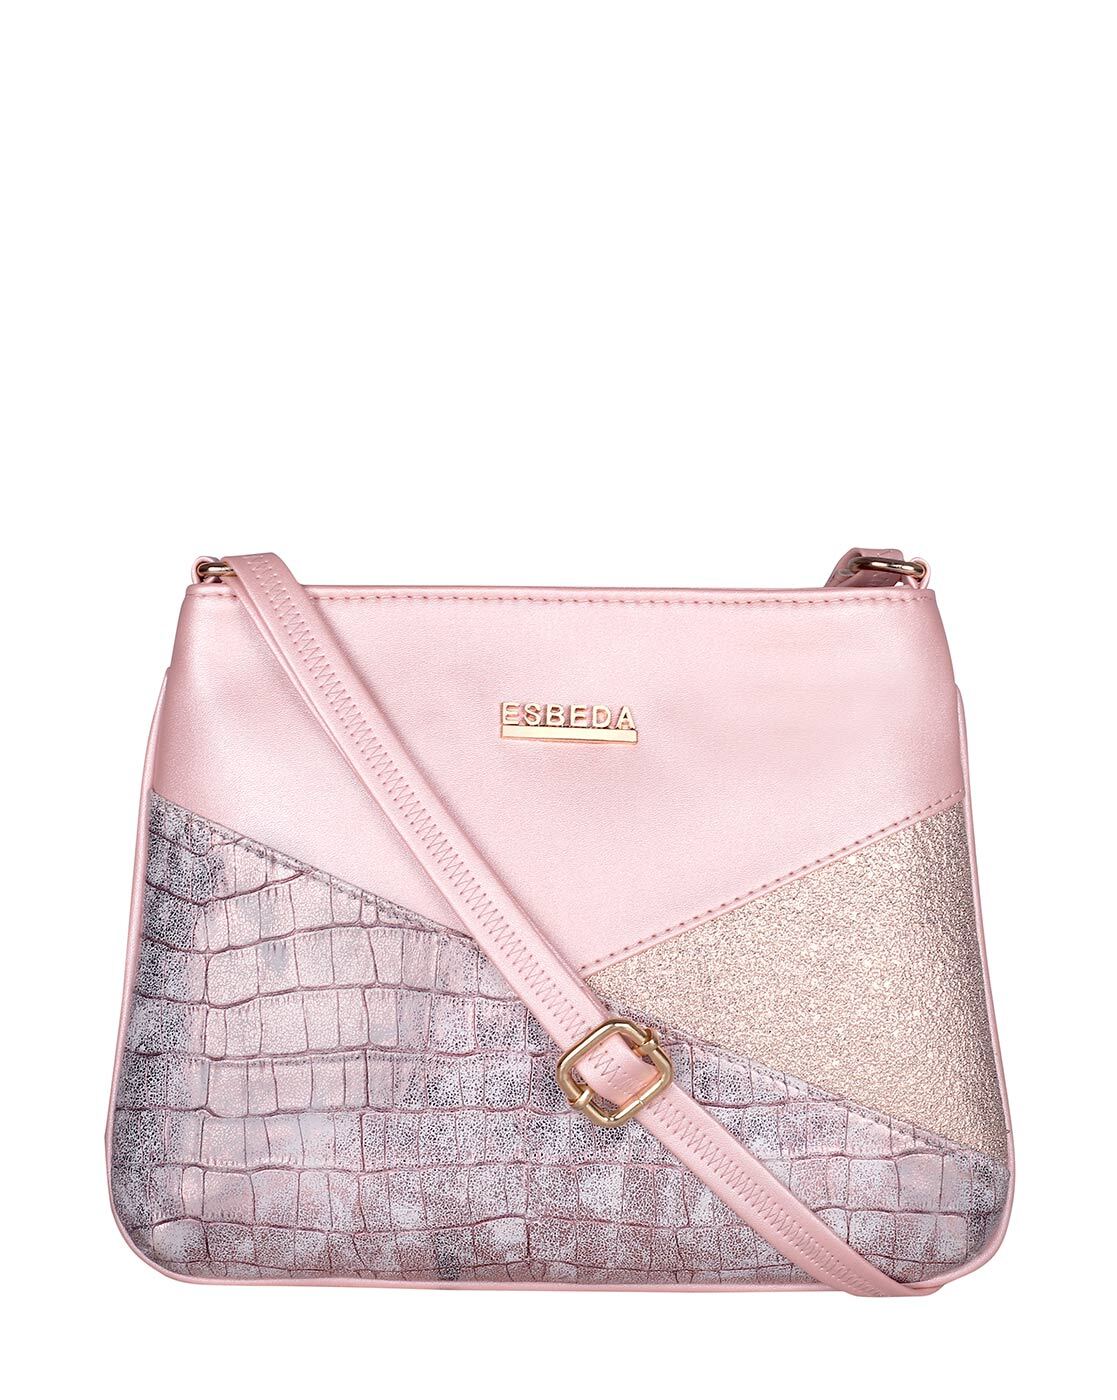 Buy ESBEDA Peach Color Glitter Top Handle Handbag For Womens Online